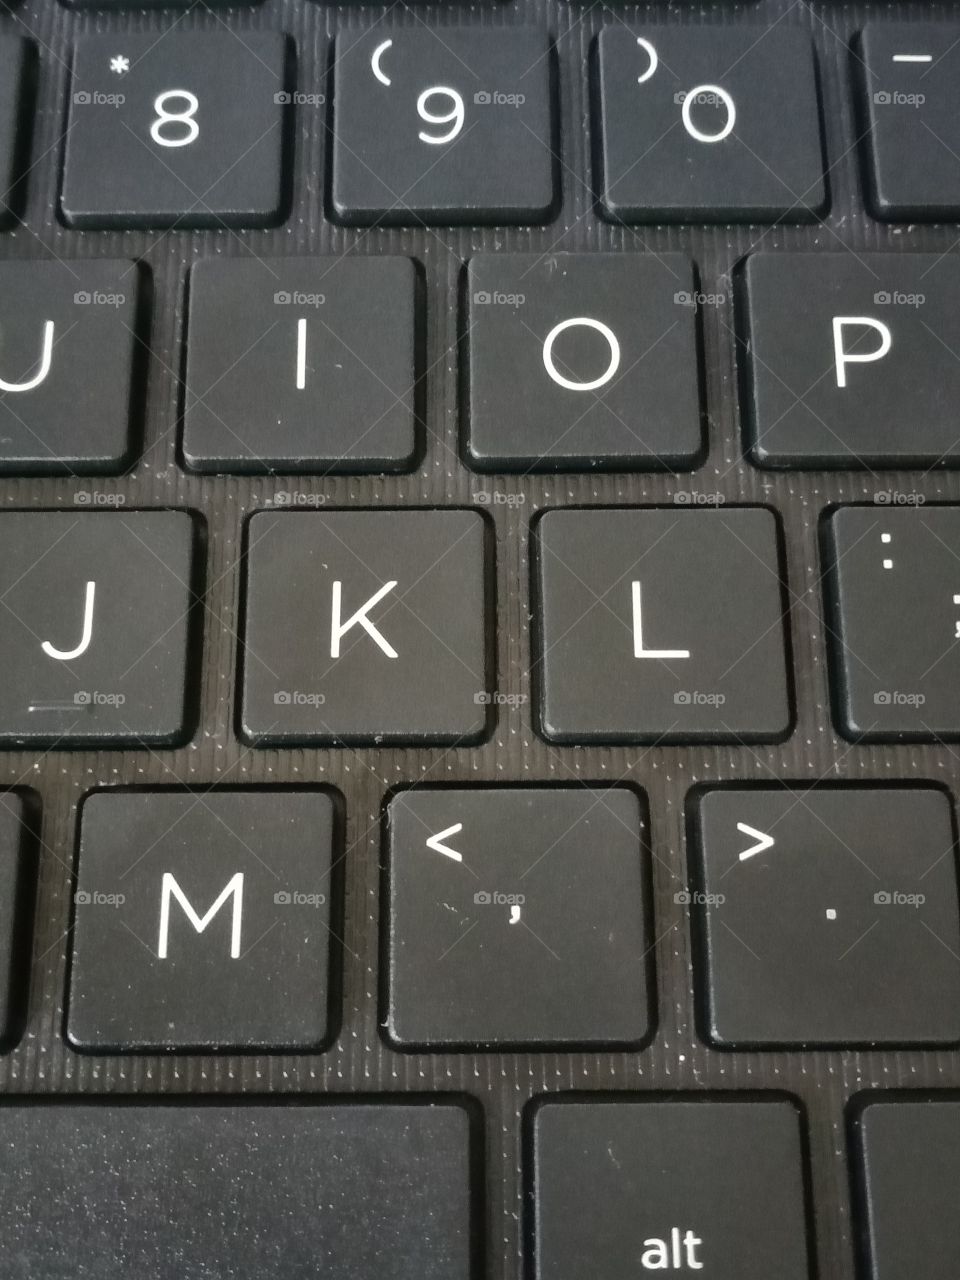 a keyboard up close